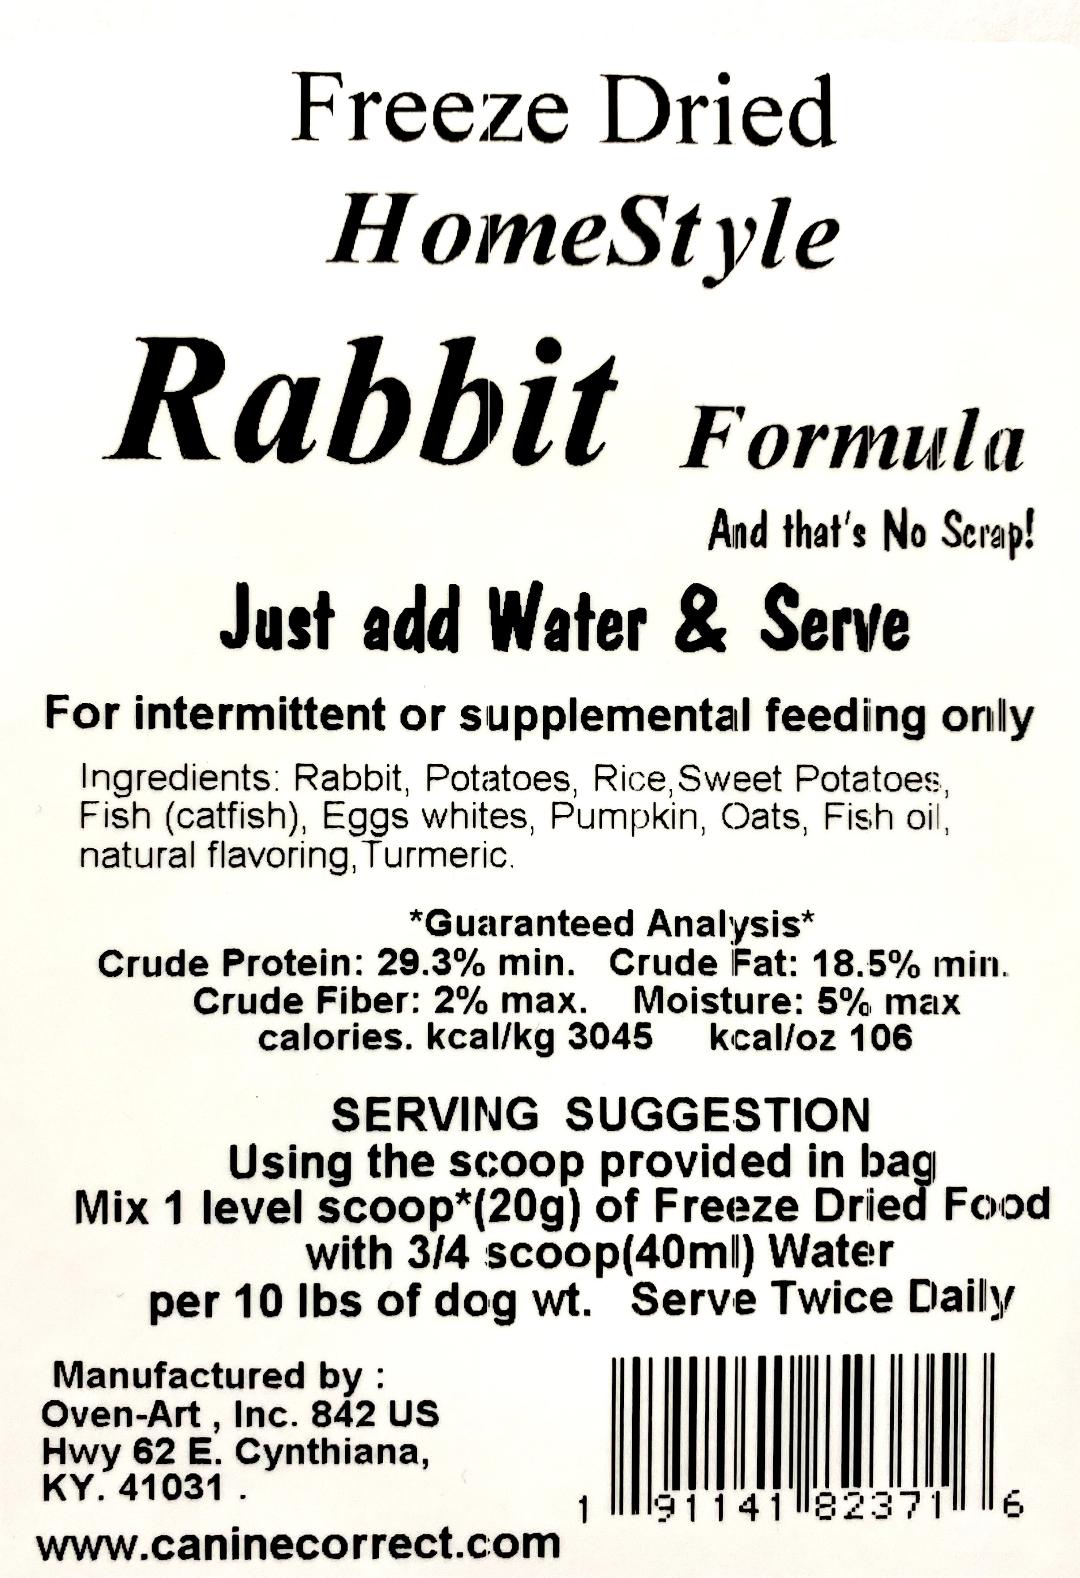 Canine Correct Home-Style Rabbit Formula